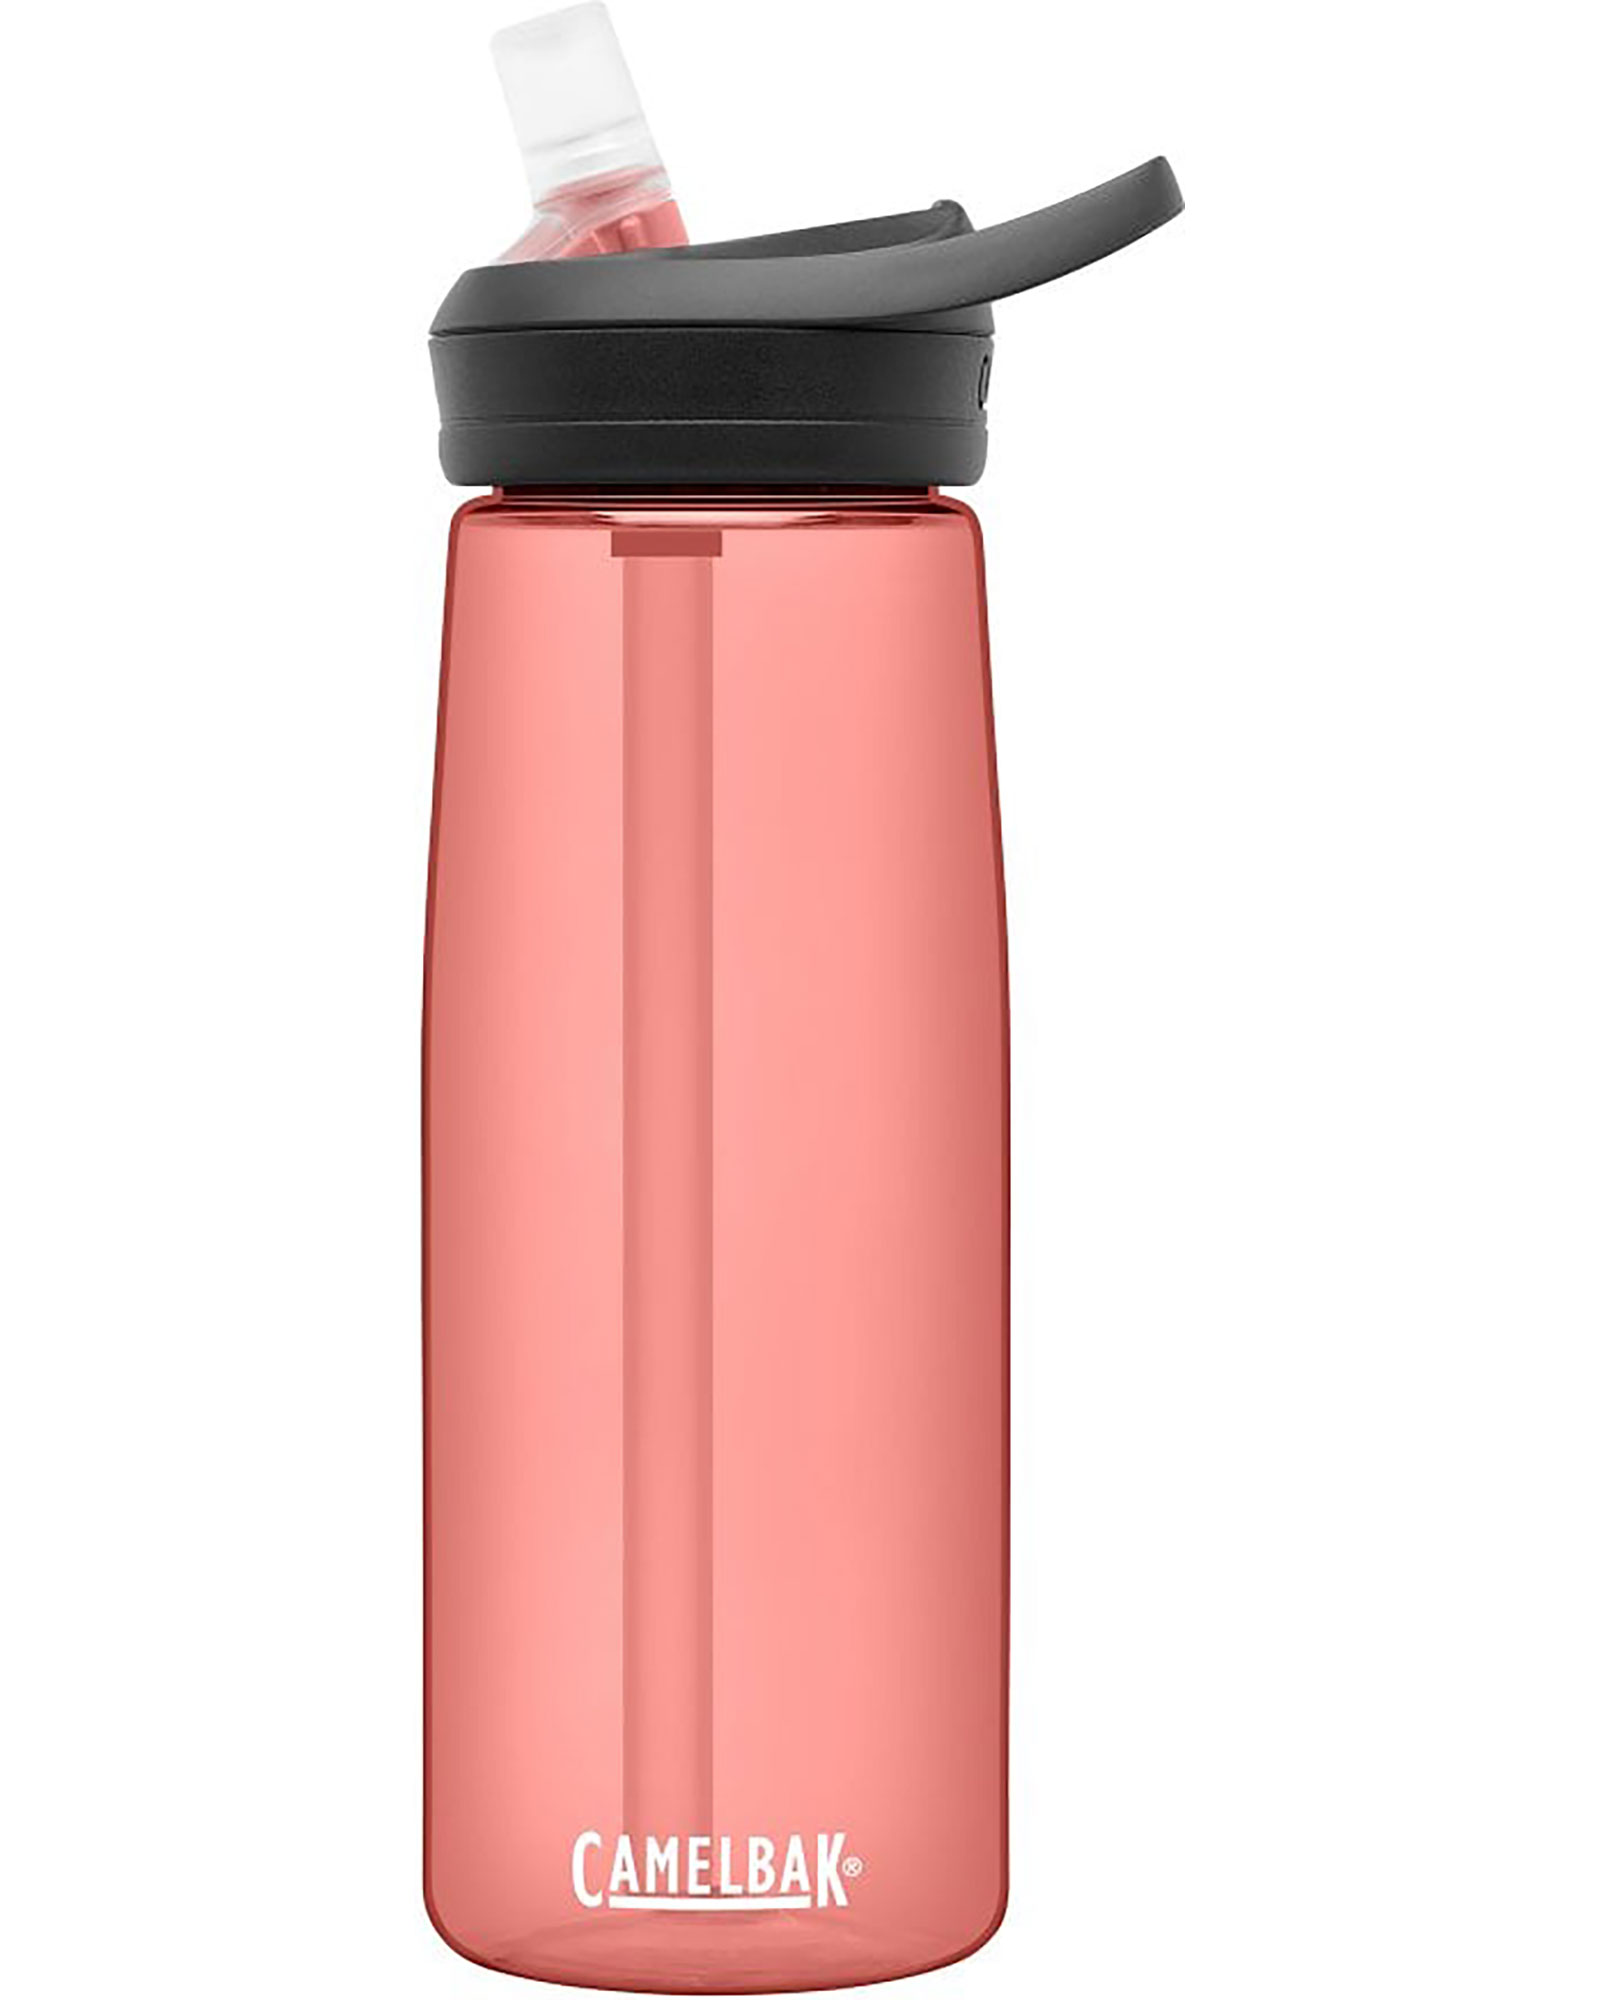 CamelBak eddy + 0.75L Water Bottle - Rose